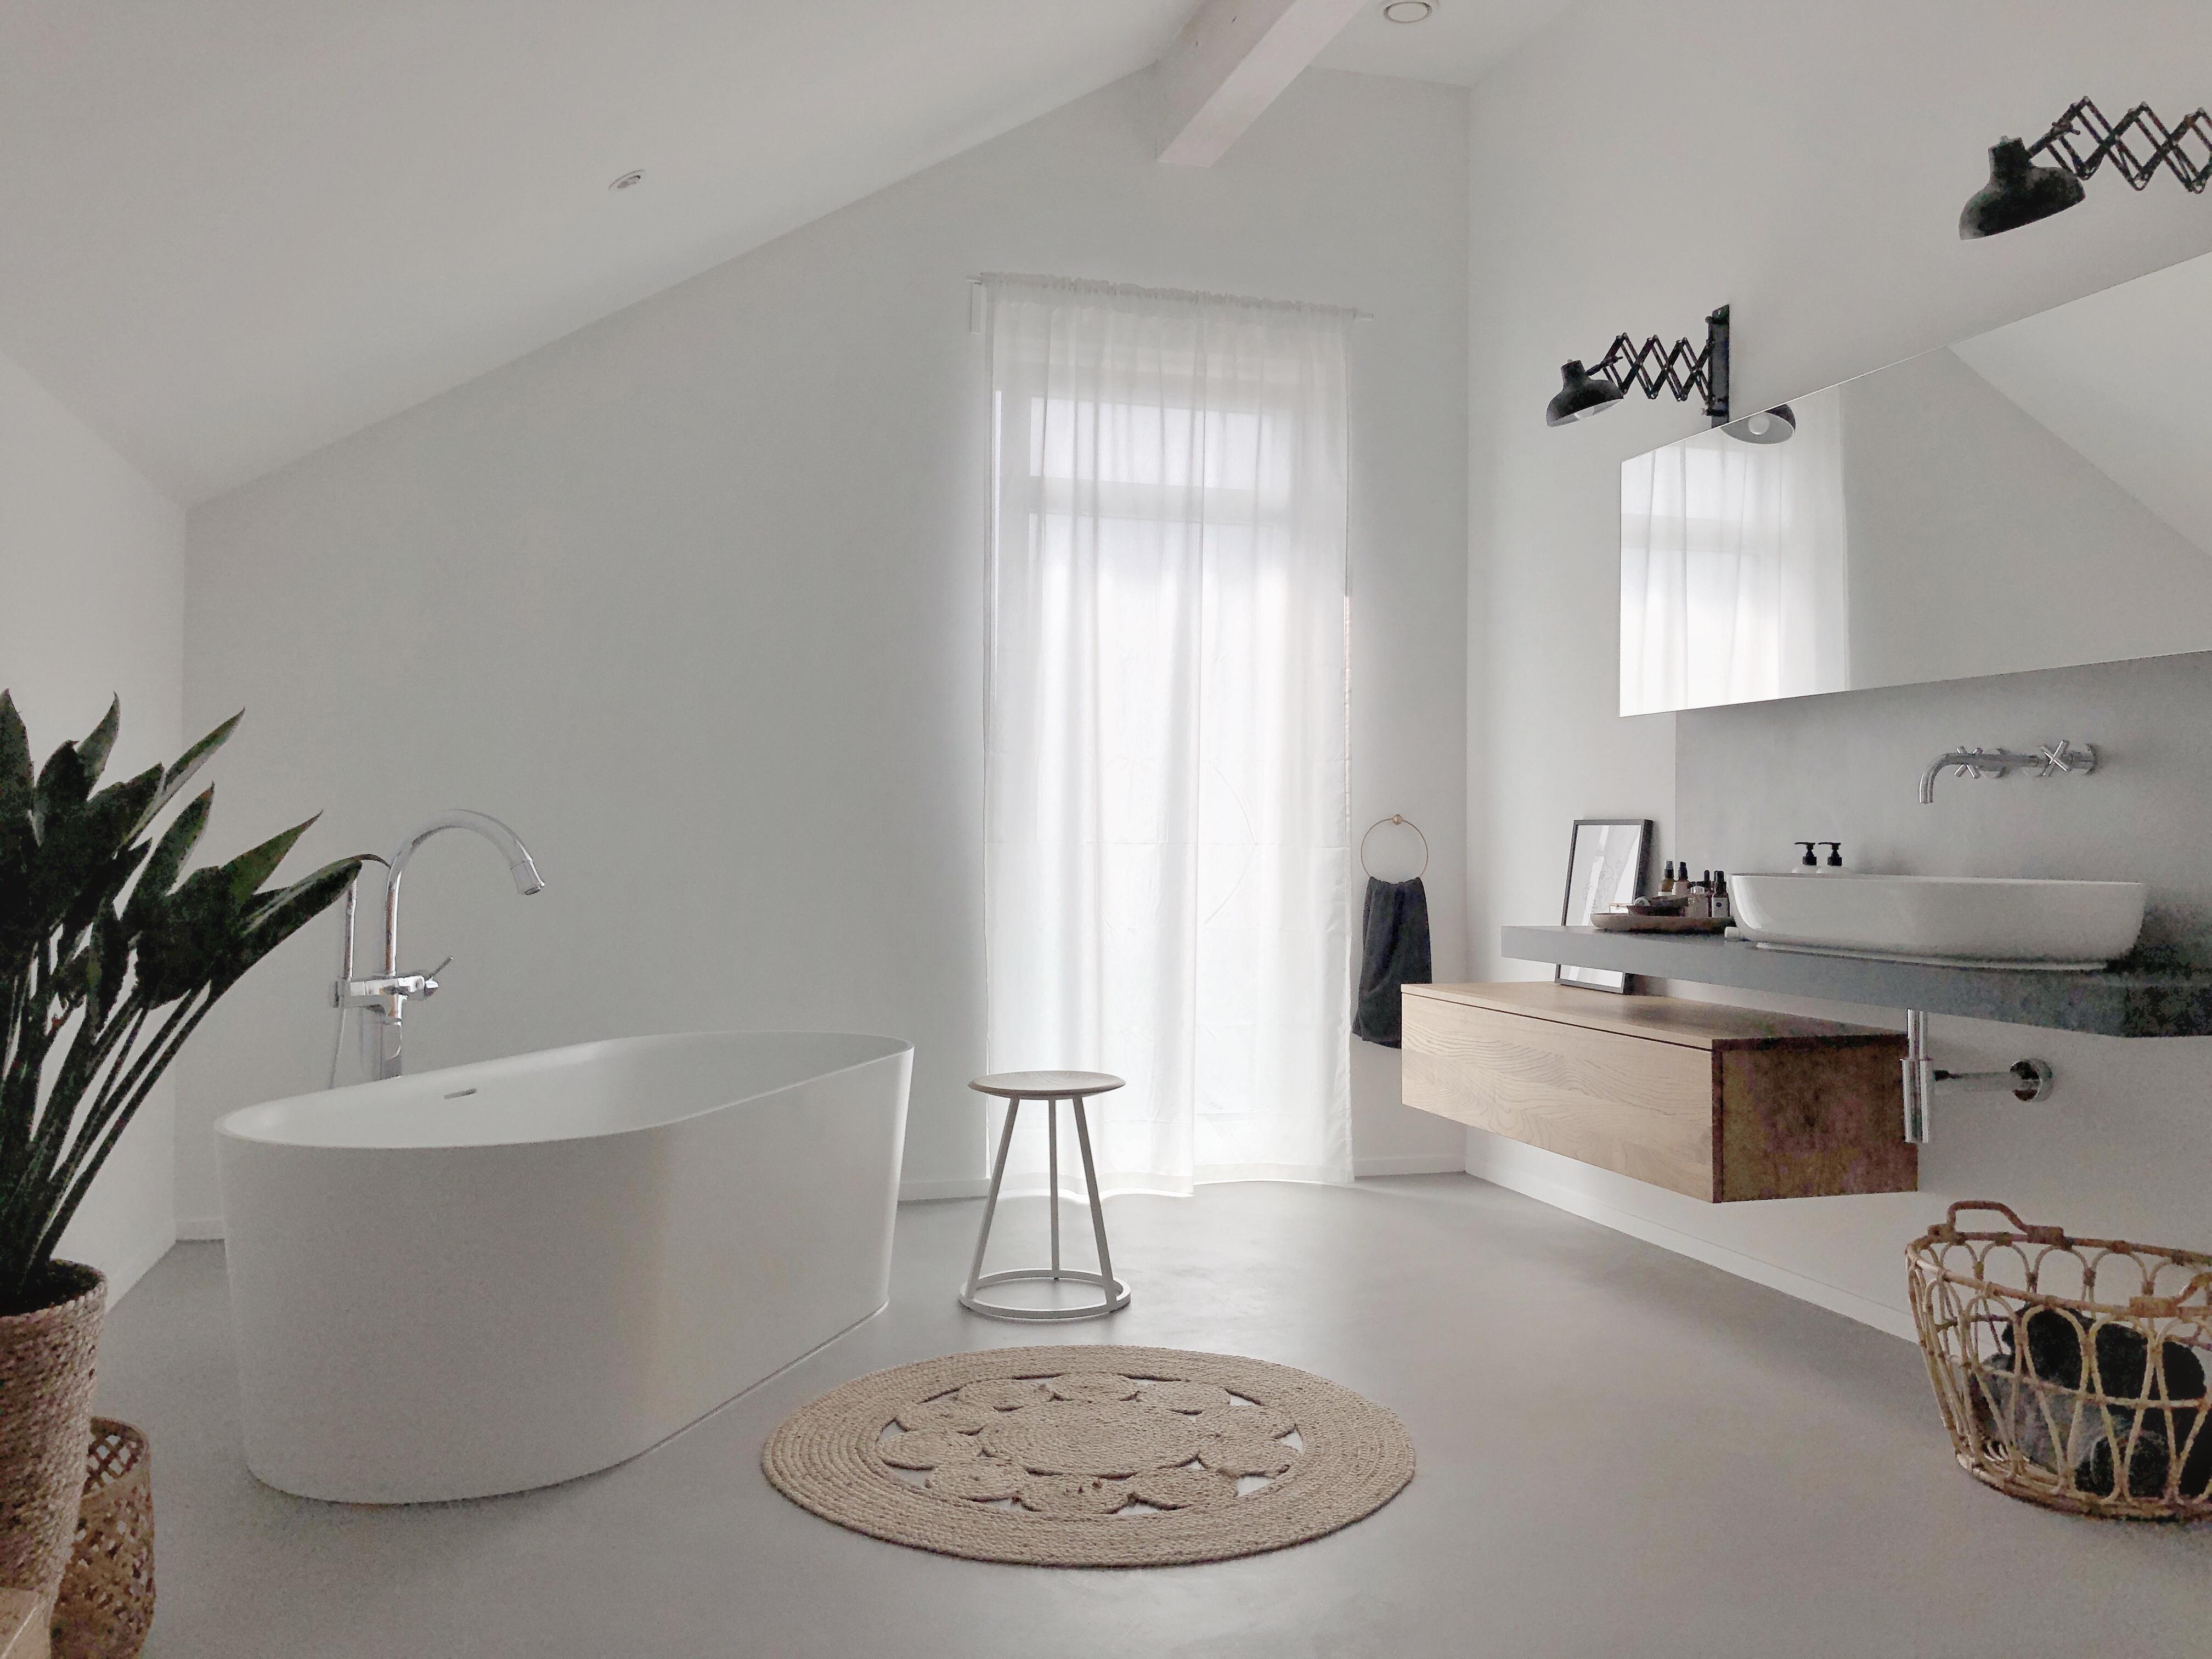 Badezimmer mit Beton!
#badezimmer#betoncire#beton#fugenlos#minimalismus#pur